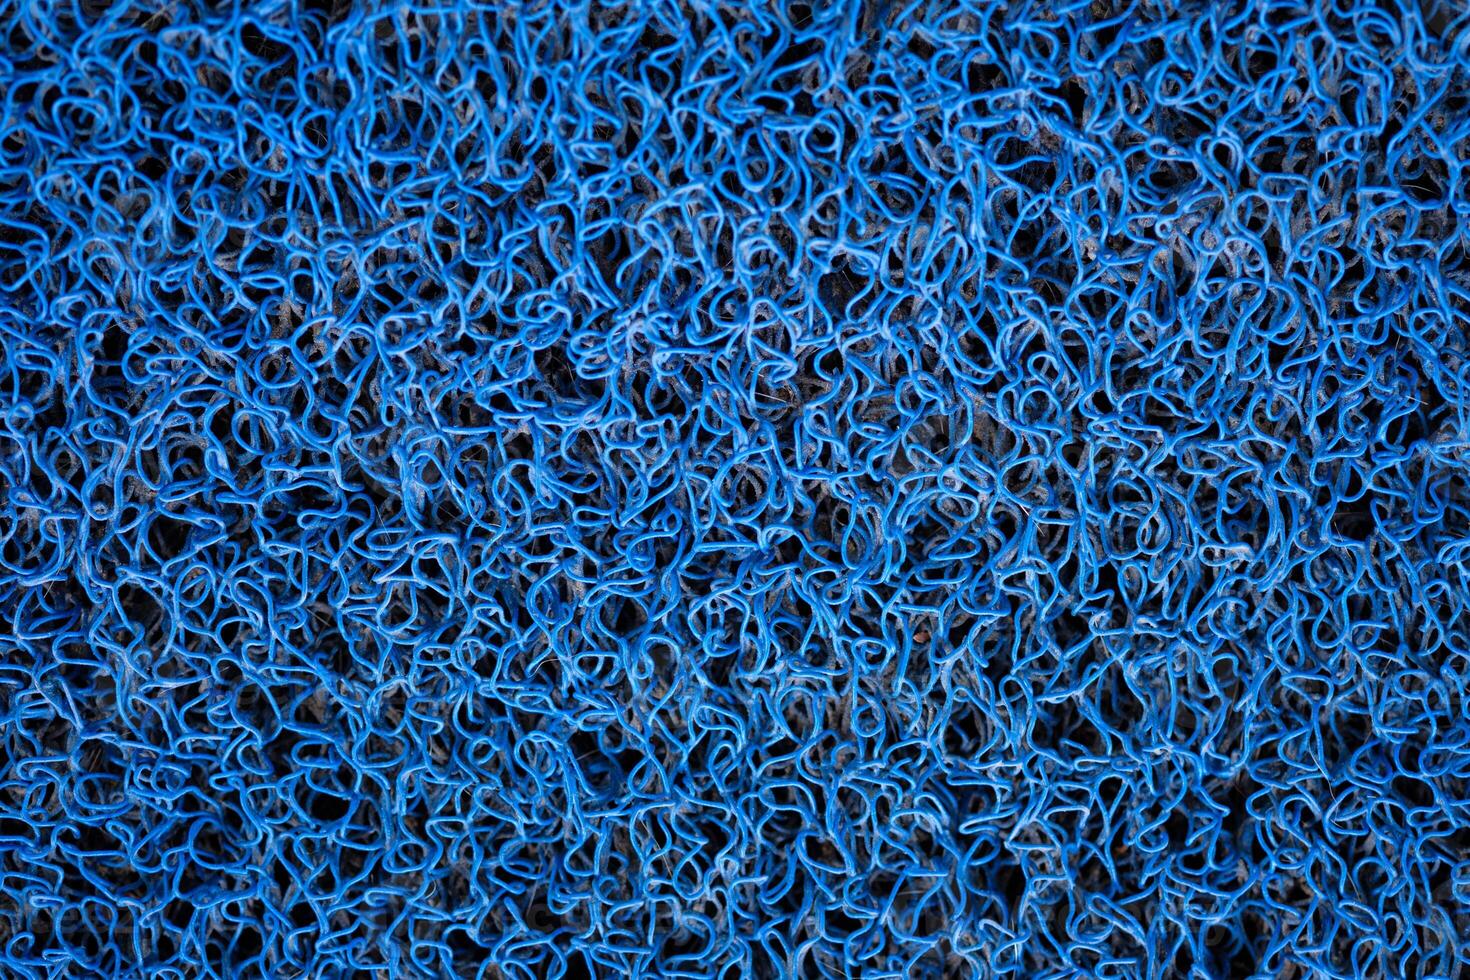 Blue vinyl curl carpet or floor mat background photo